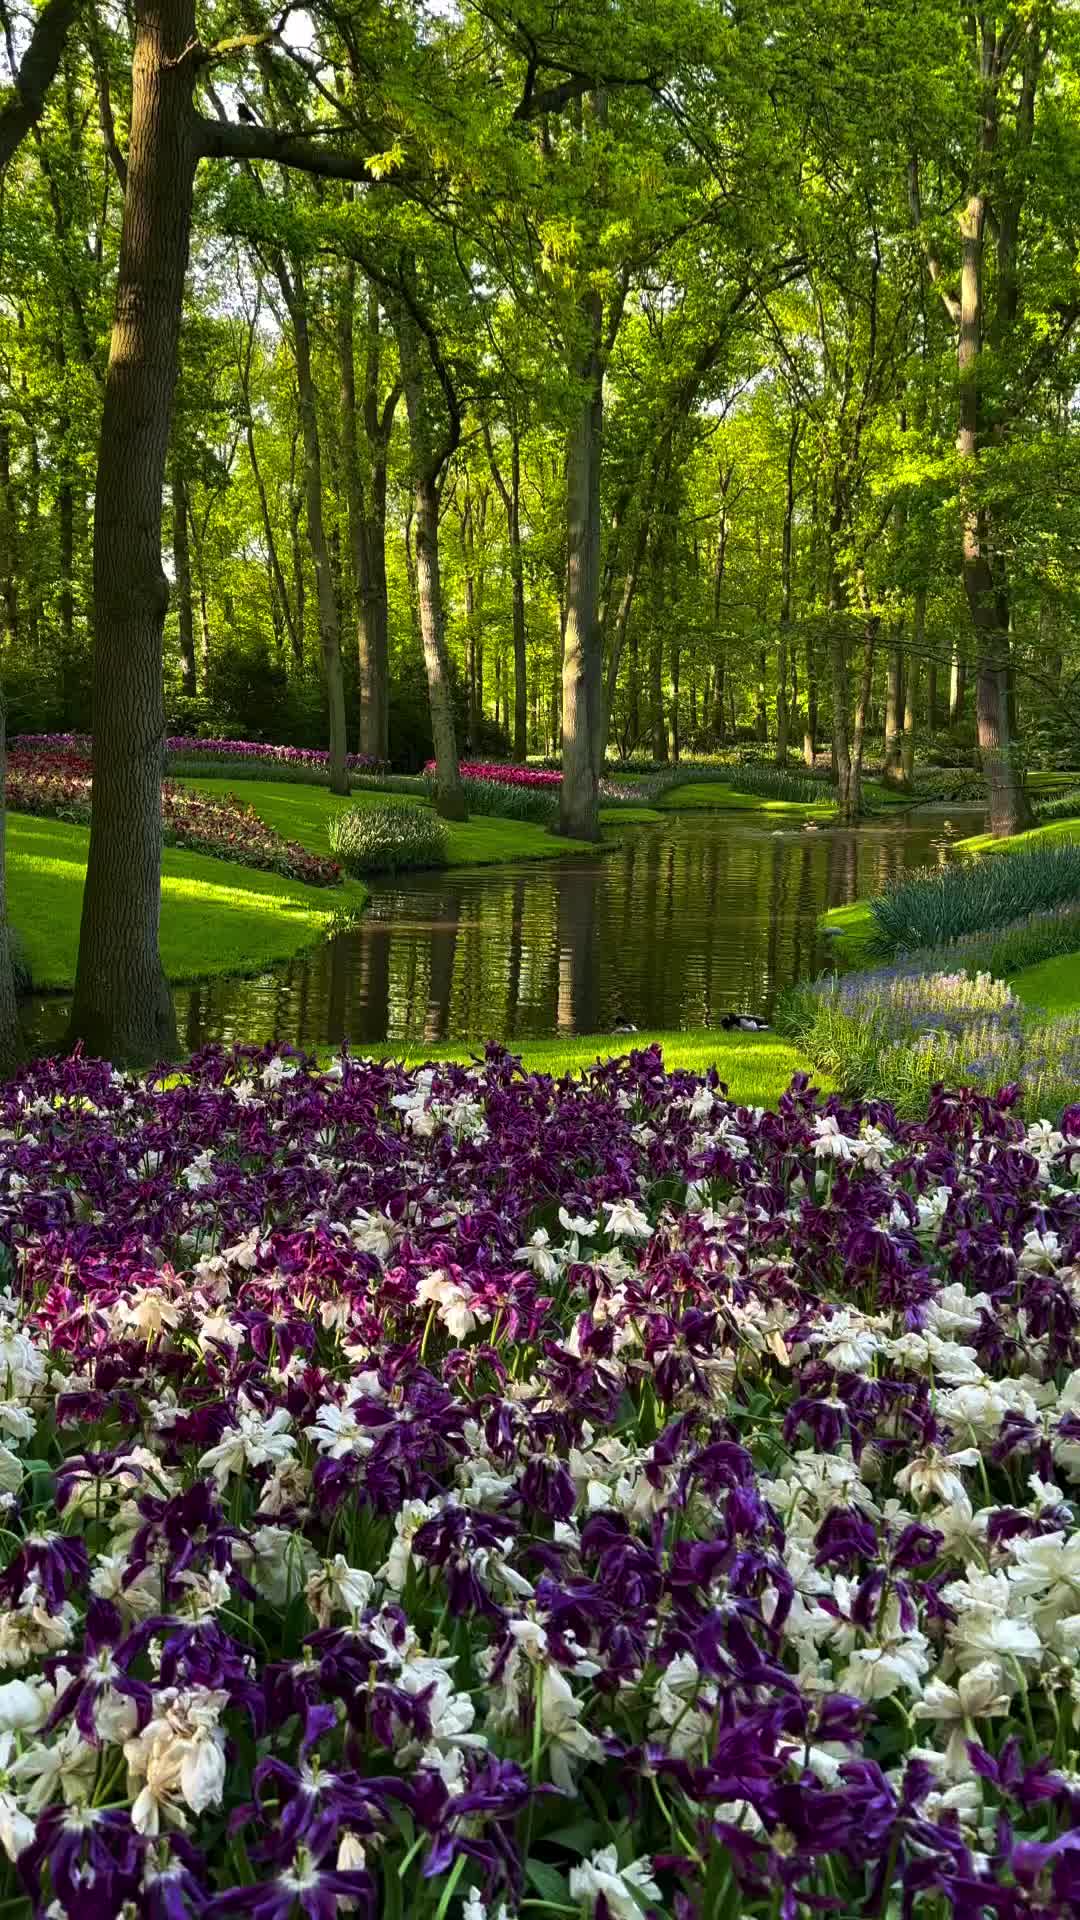 Dreamy Gardens of Holland: Visit Keukenhof Tulip Garden